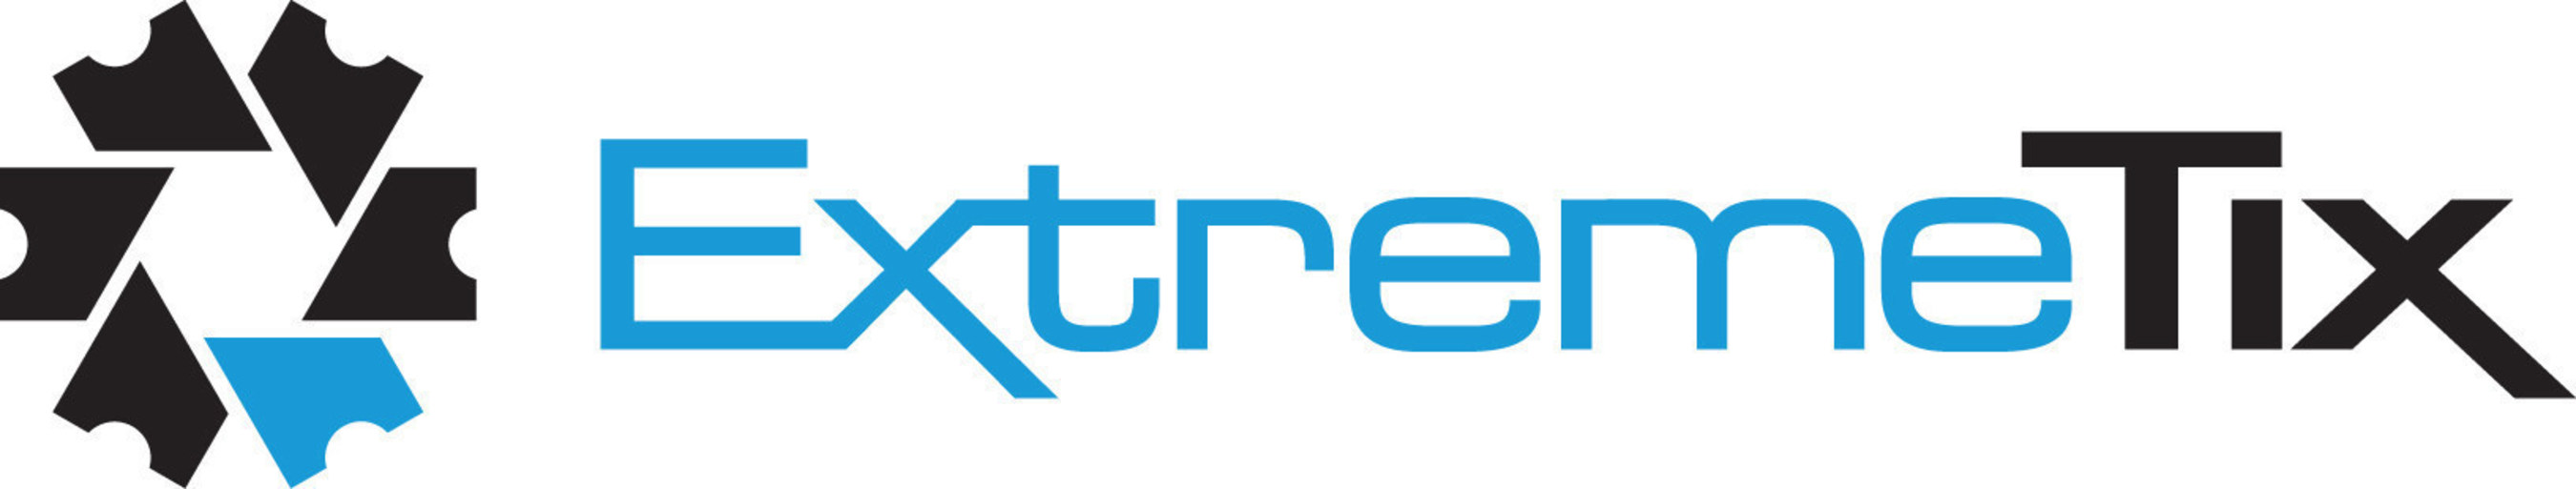 ExtremeTix Logo